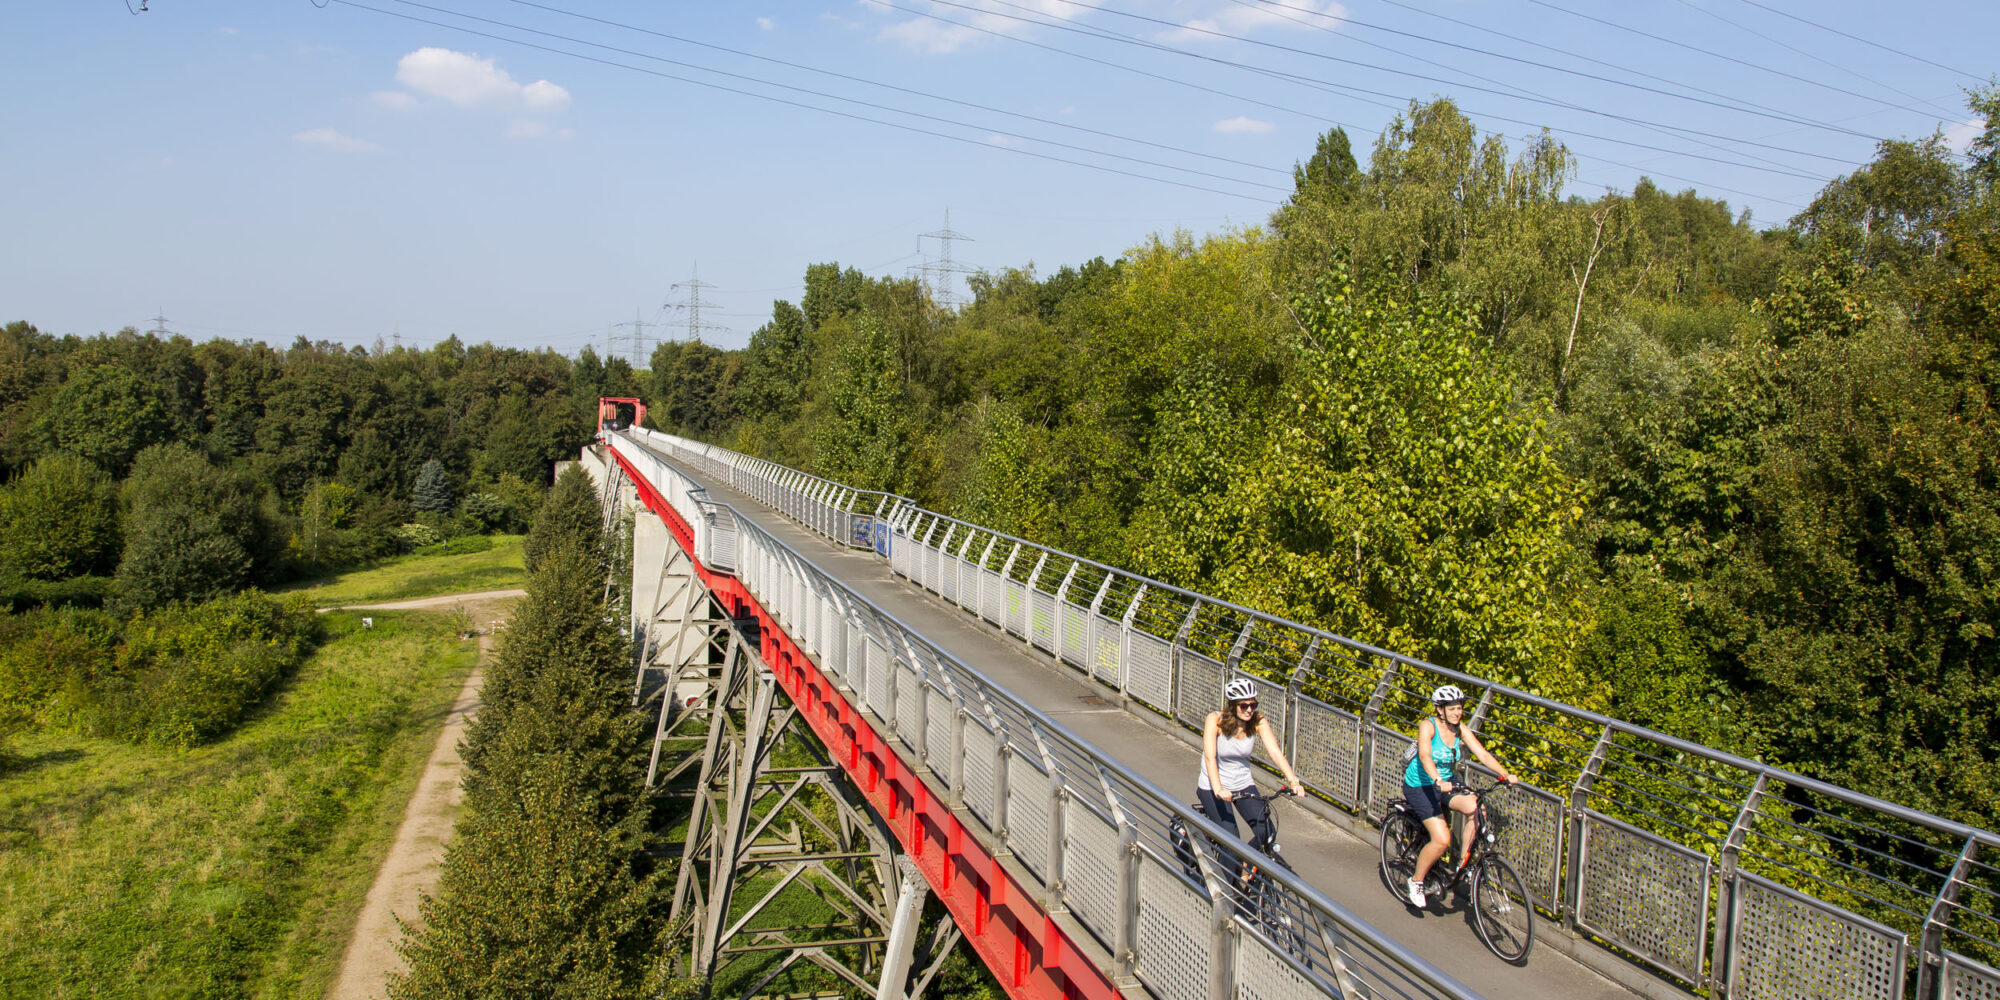 De foto toont twee fietsers op de Erzbahnbrücke van de Erzbahntrasse in Gelsenkirchen op de RevierRoute Probierstück